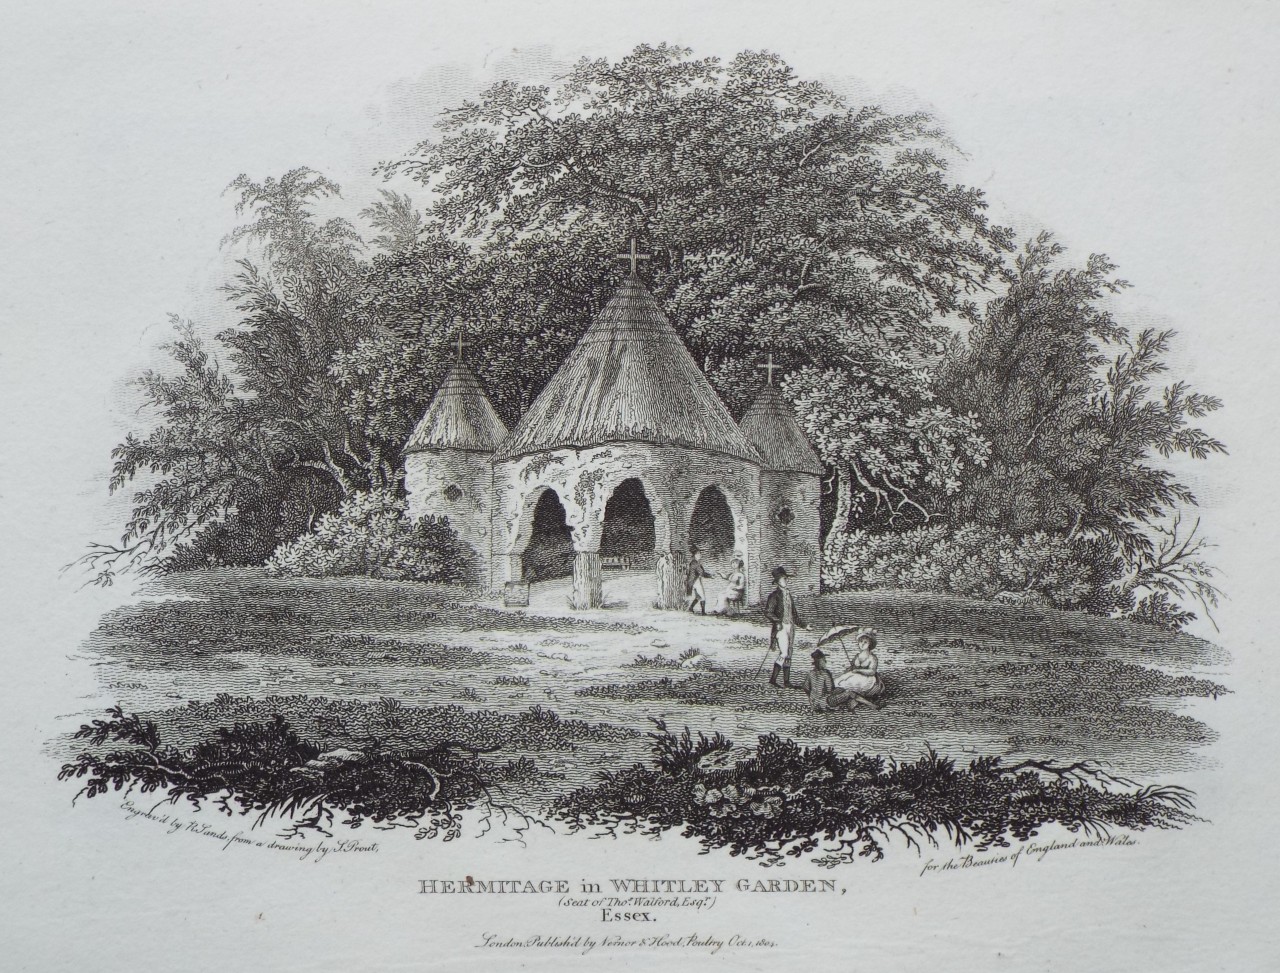 Print - Hermitage in Whitley Garden, (Seat of Thos. Walford, Esqr.) Essex. - Sands